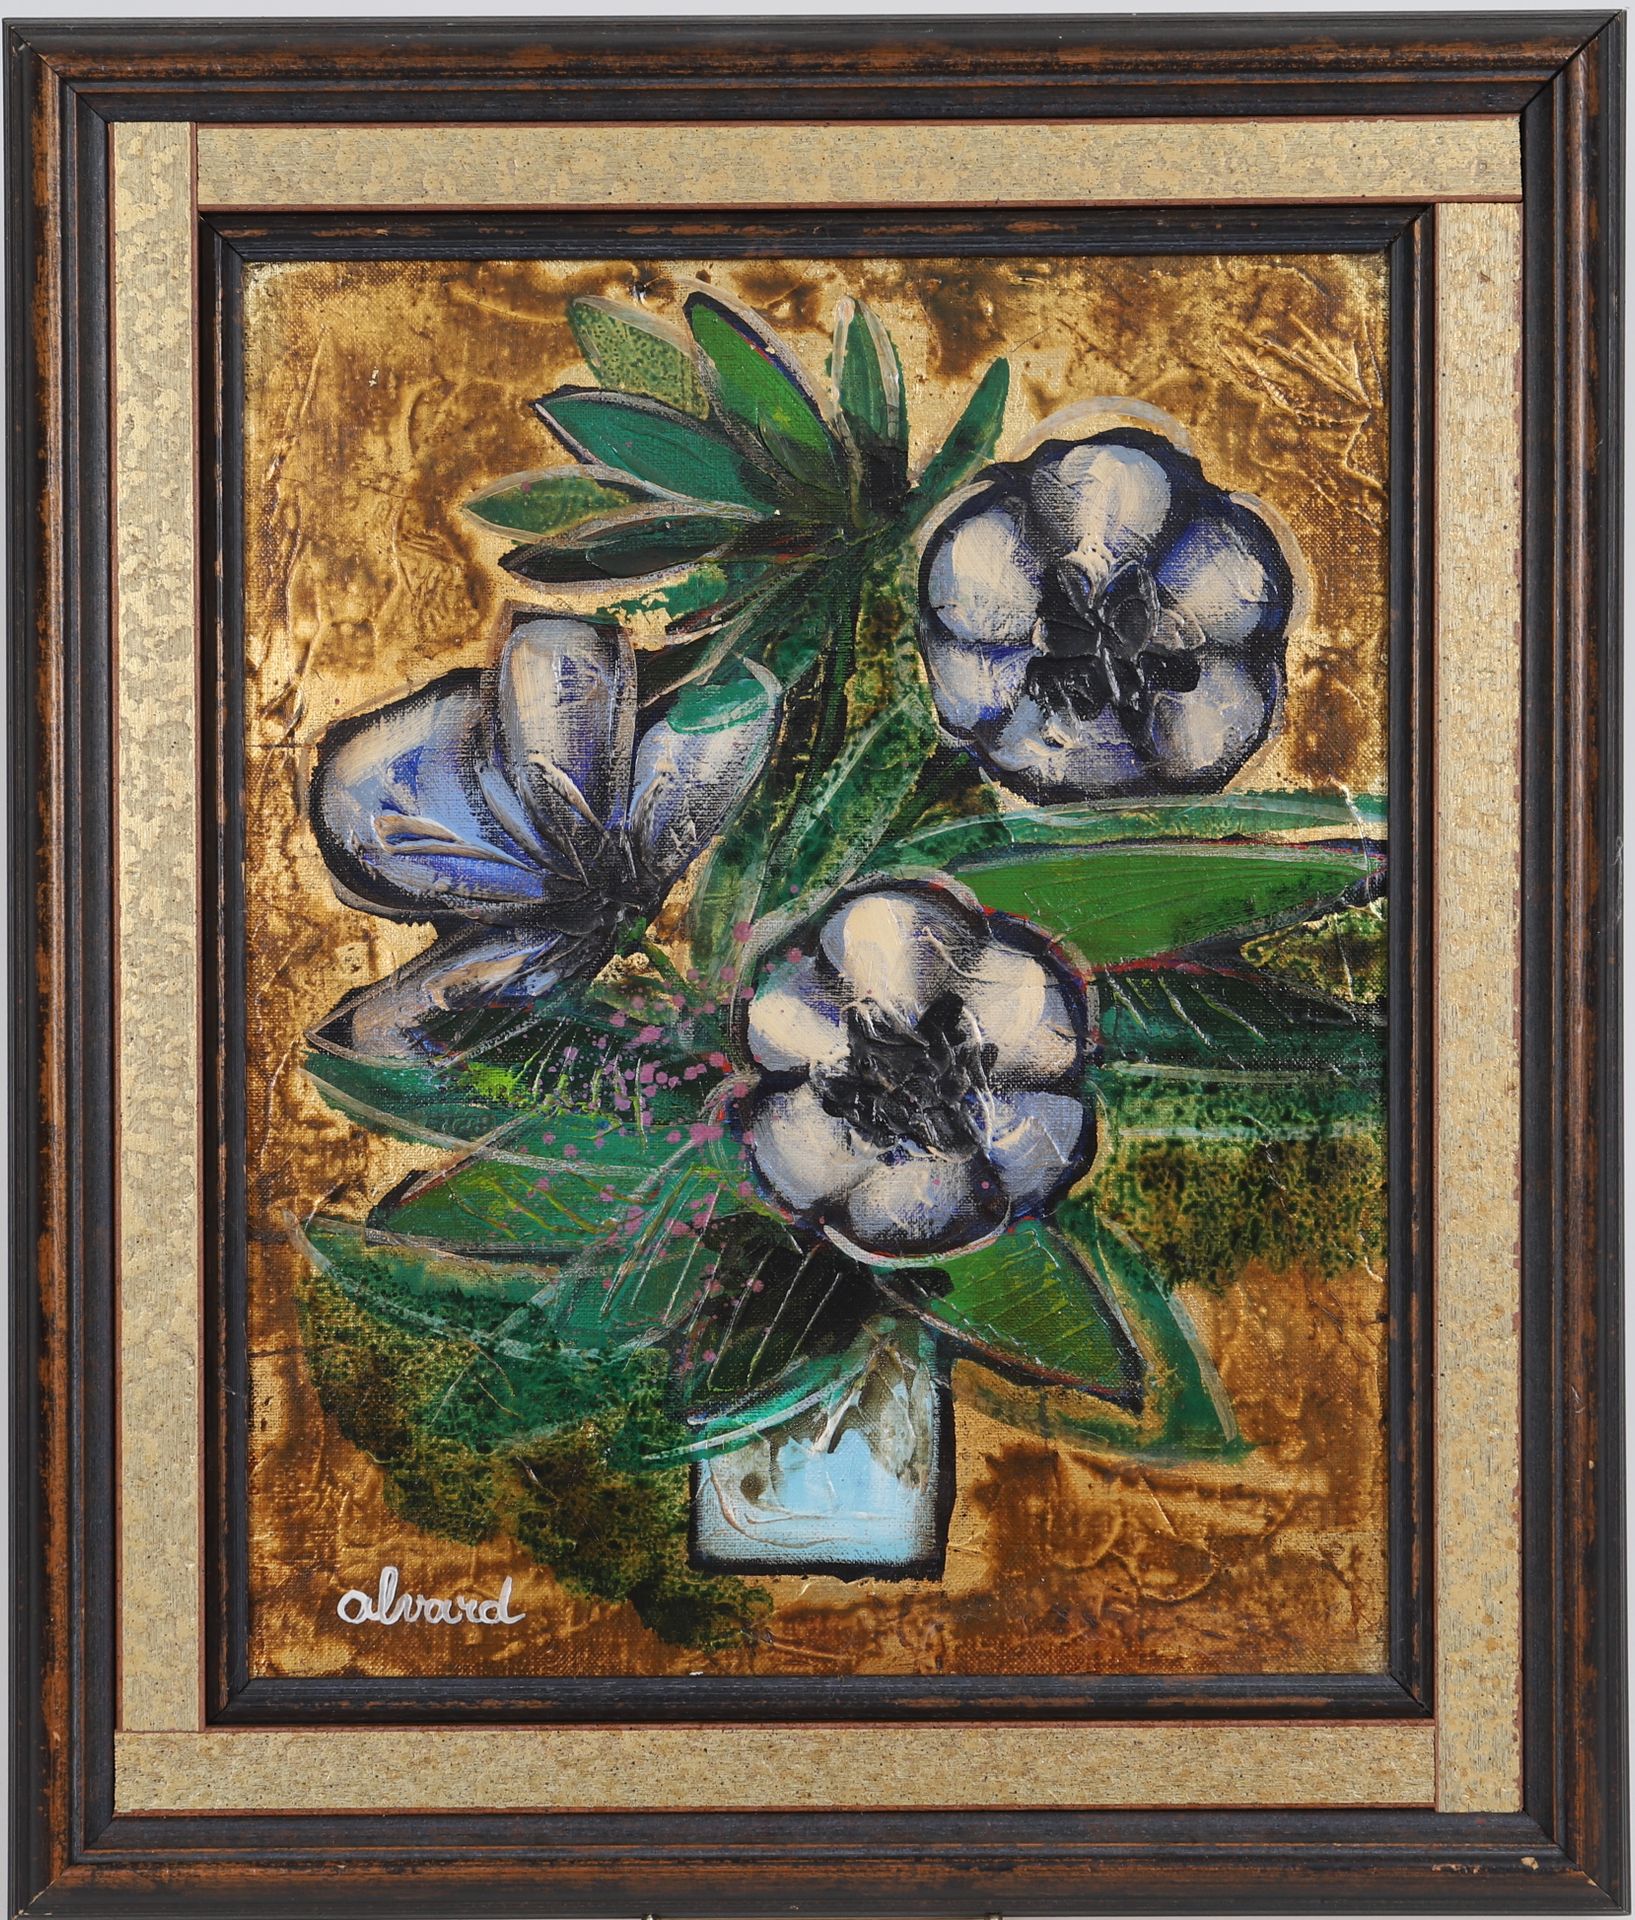 Null Jules Alvard (born 1945) 
"Dora" 
Oil on canvas, still life with flowers 
S&hellip;